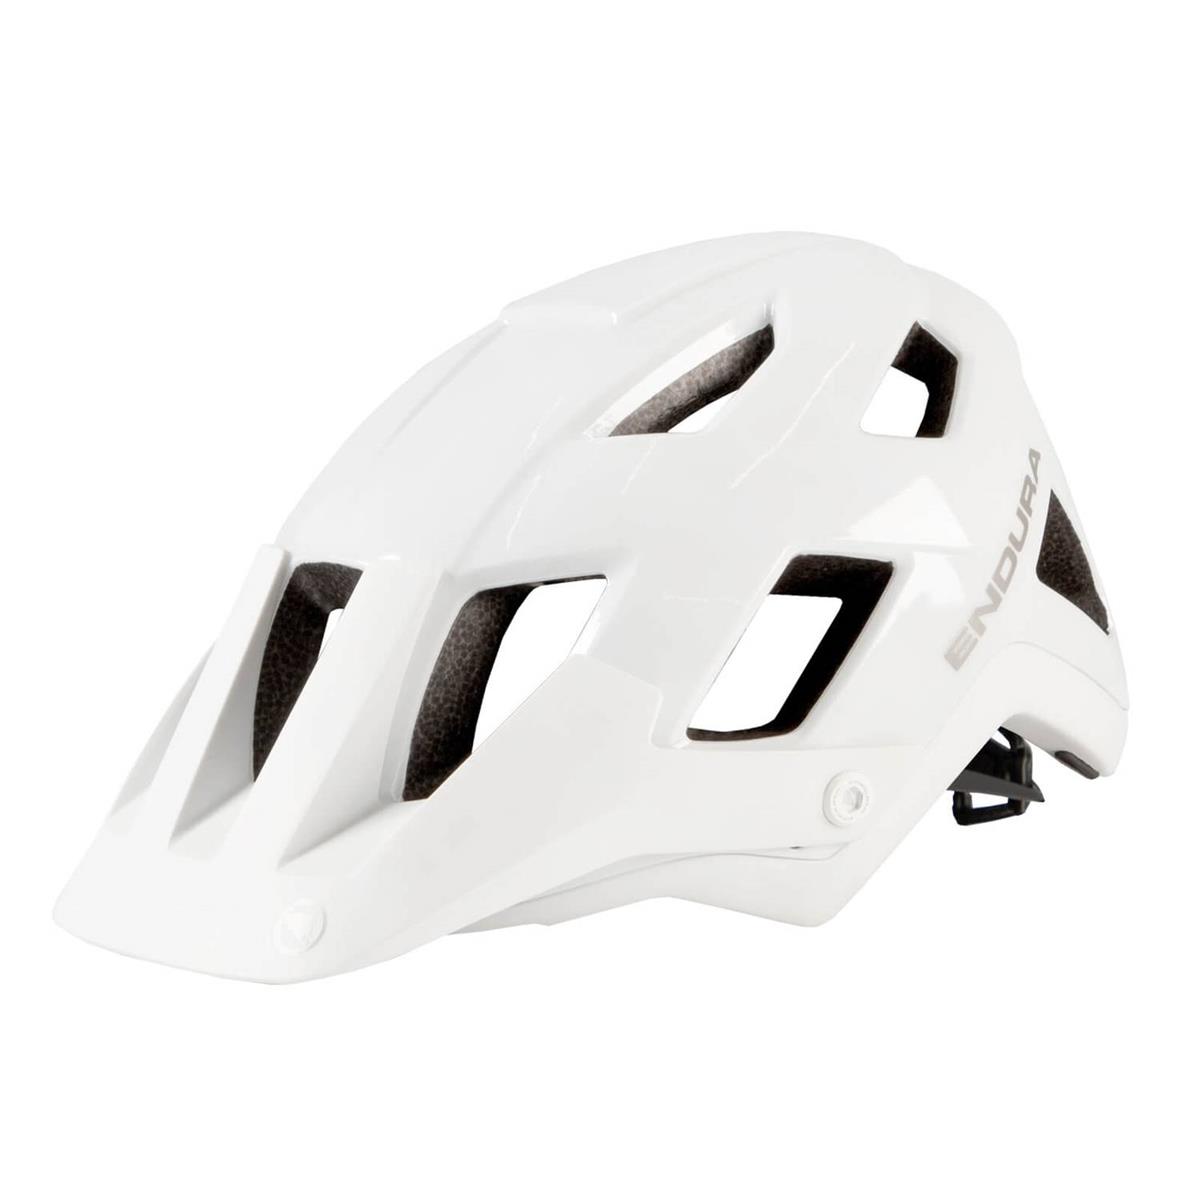 Hummvee Plus MTB Enduro Helmet White Size M/L (55-59cm)